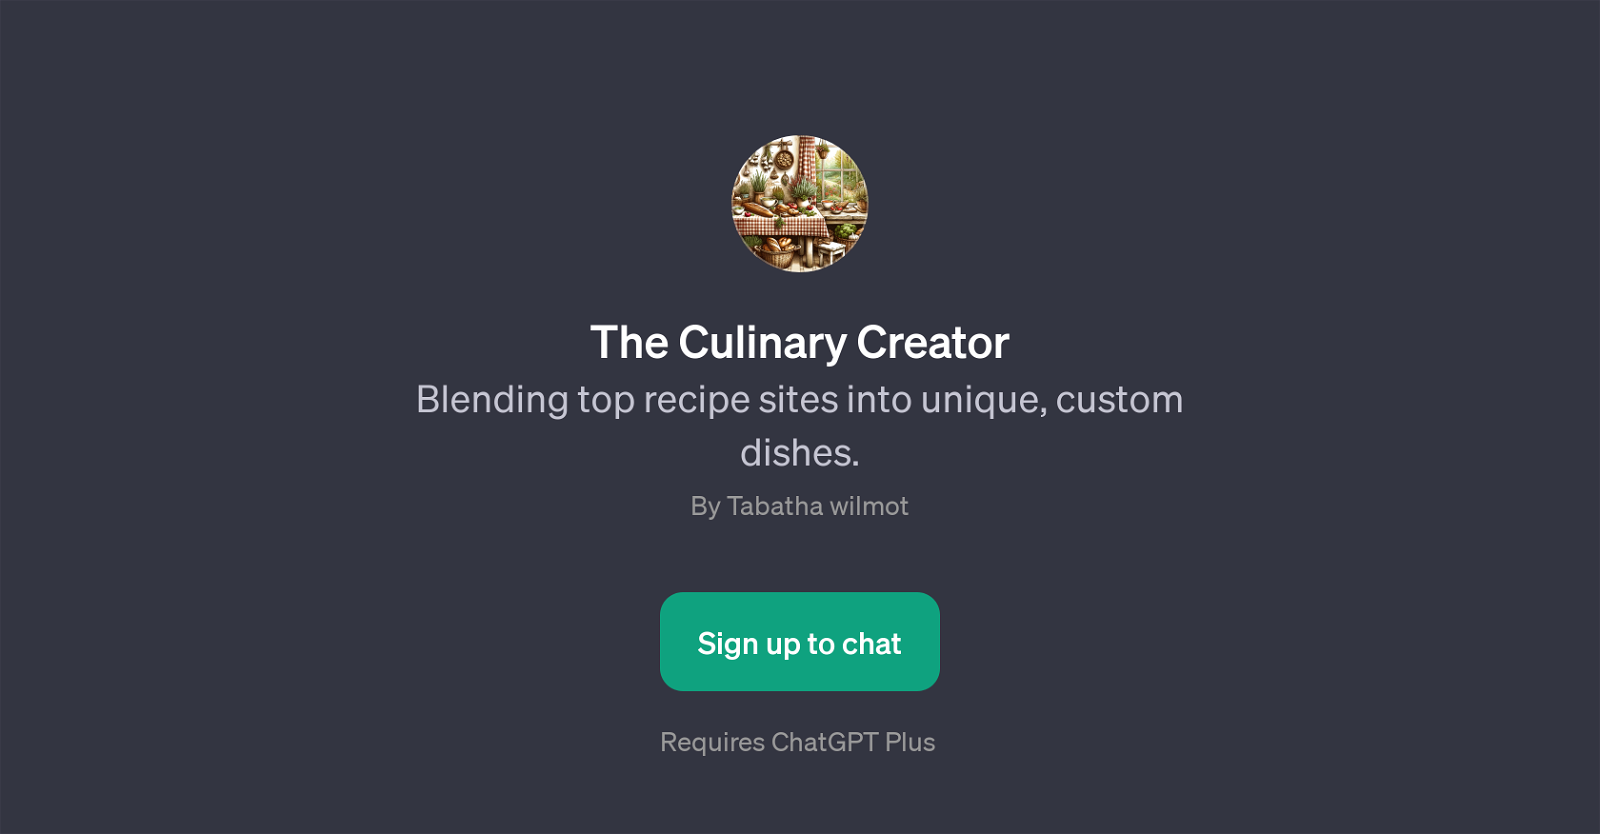 The Culinary Creator website